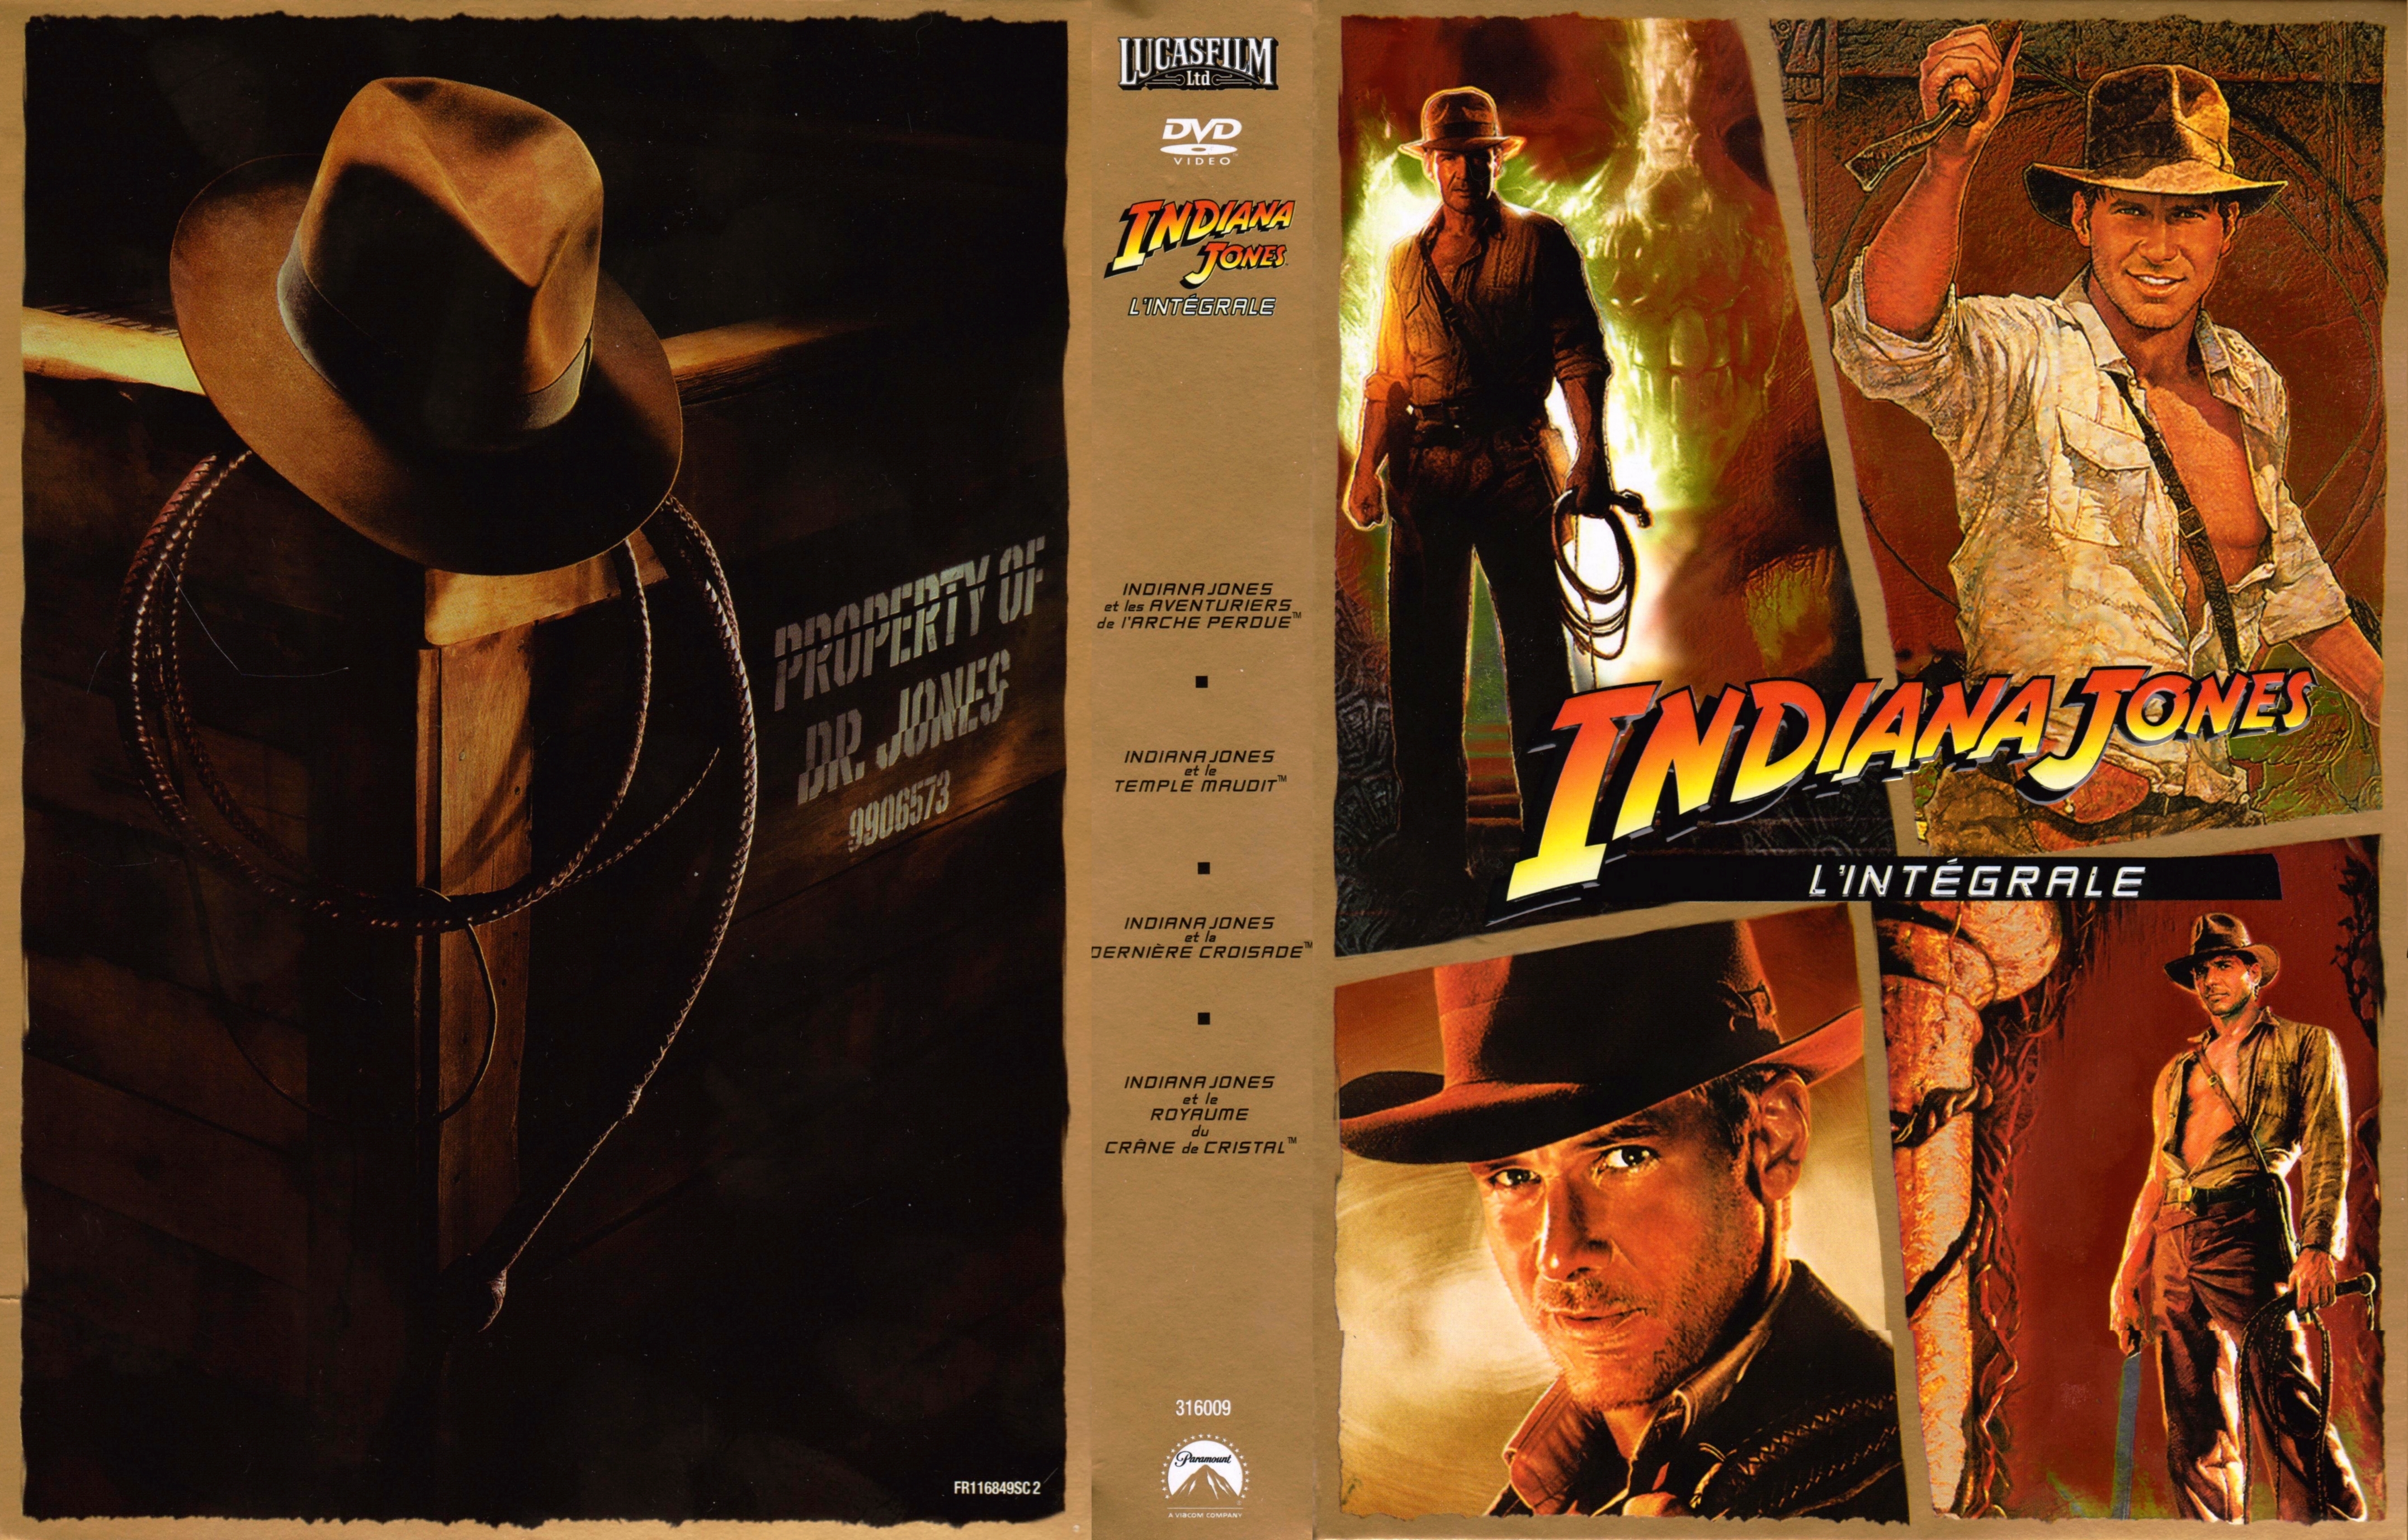 Jaquette DVD Indiana Jones Intgrale COFFRET